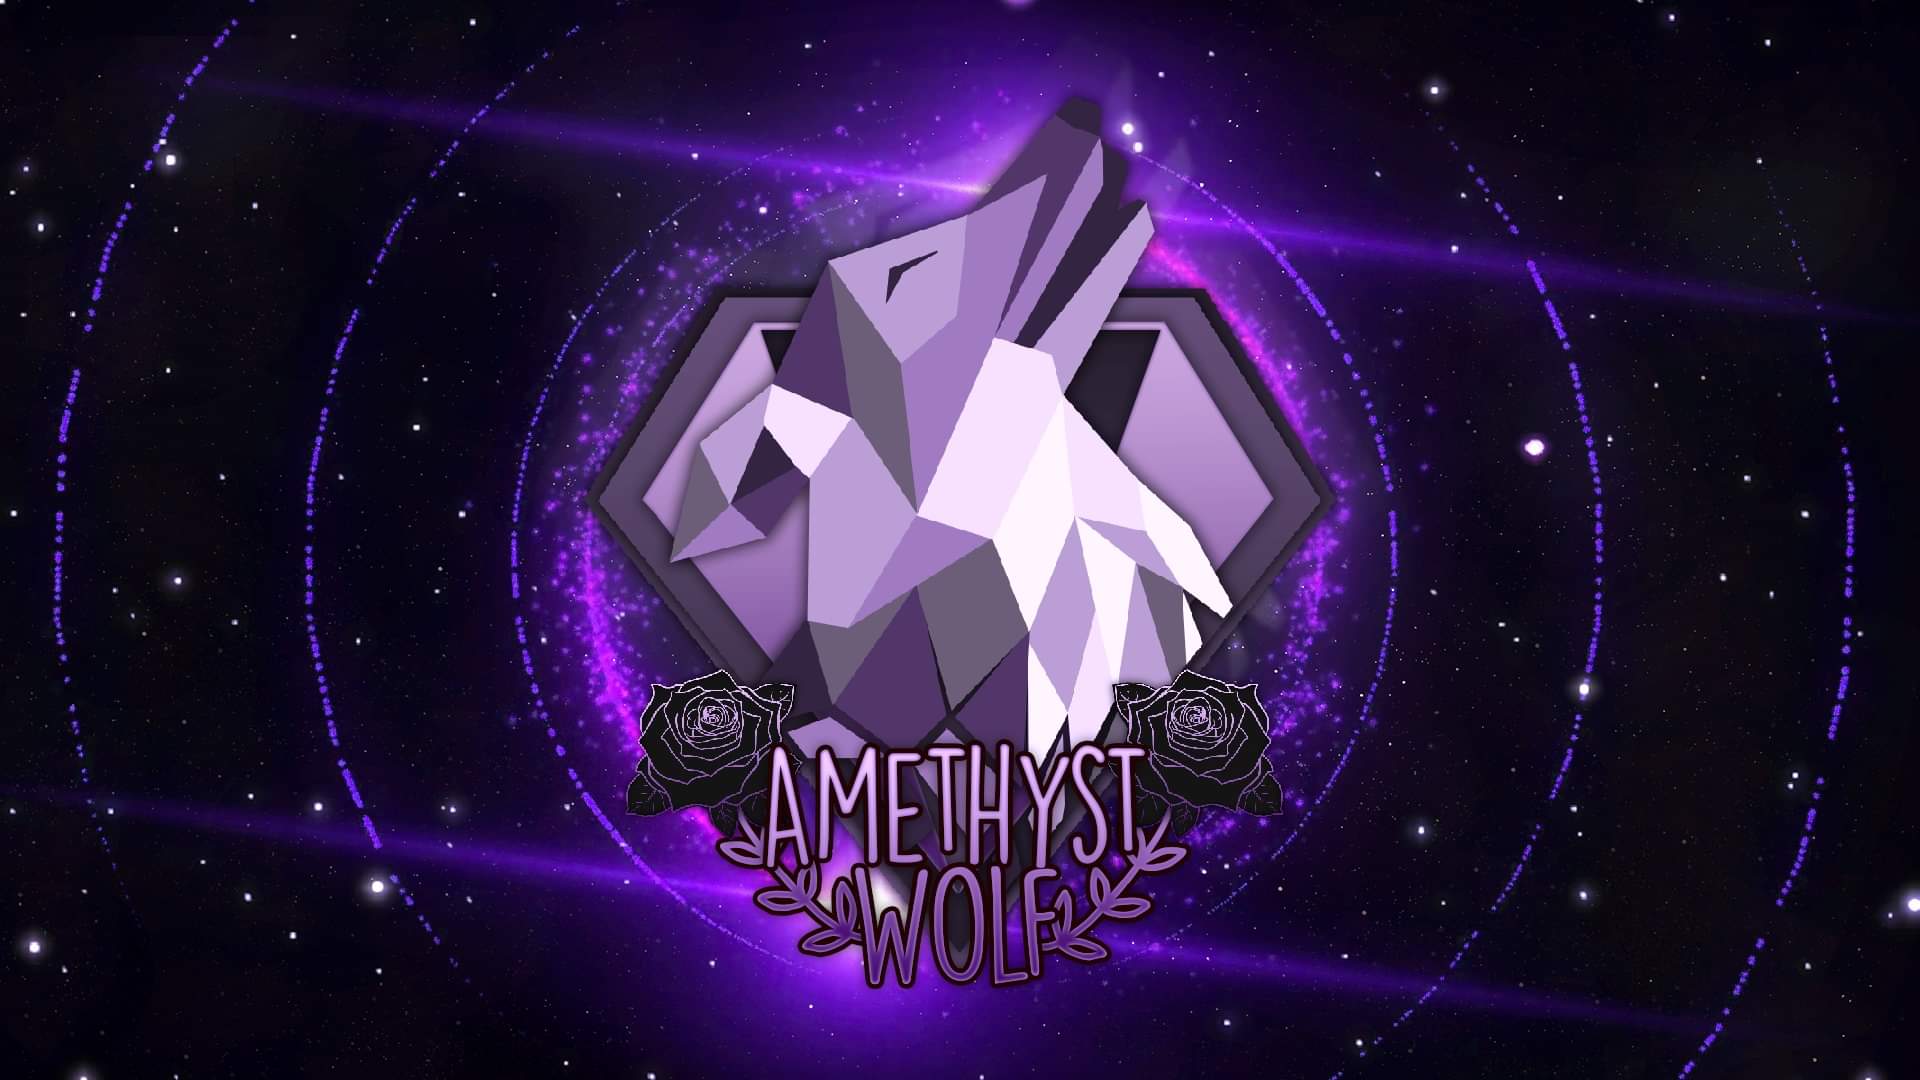 Amethyst Wolf Cover Design